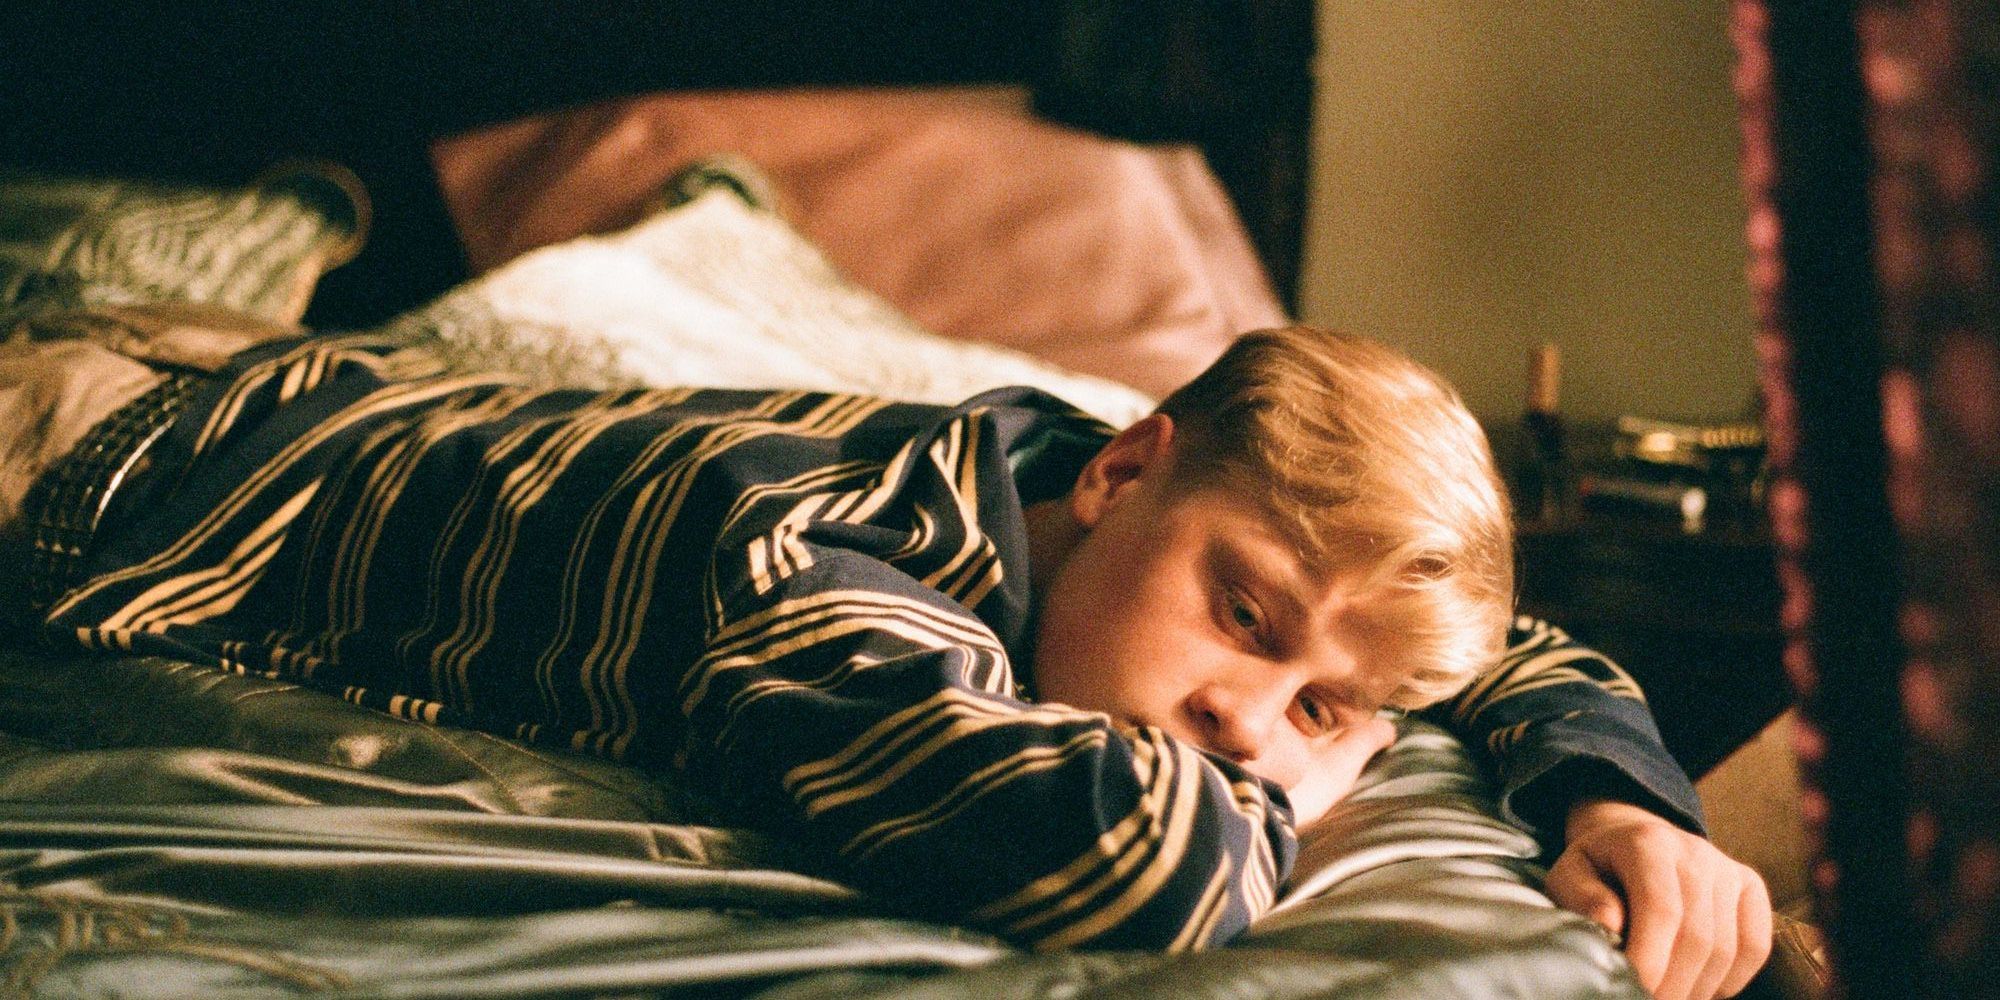 Antoine Olivier Pilon lying in bed in Mommy.